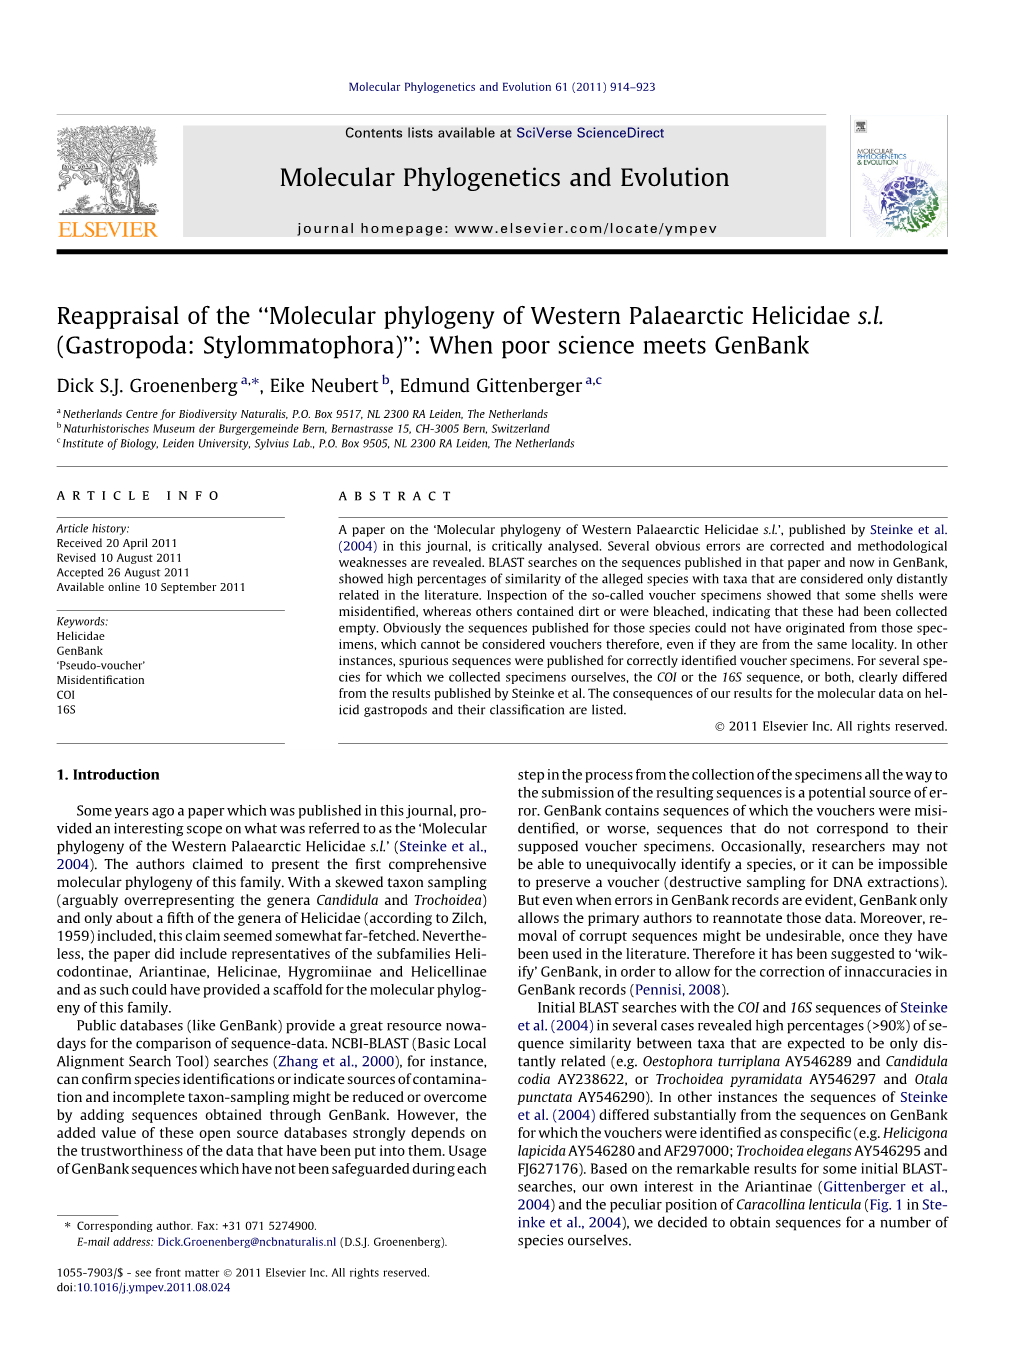 Reappraisal of the Â€Œmolecular Phylogeny Of